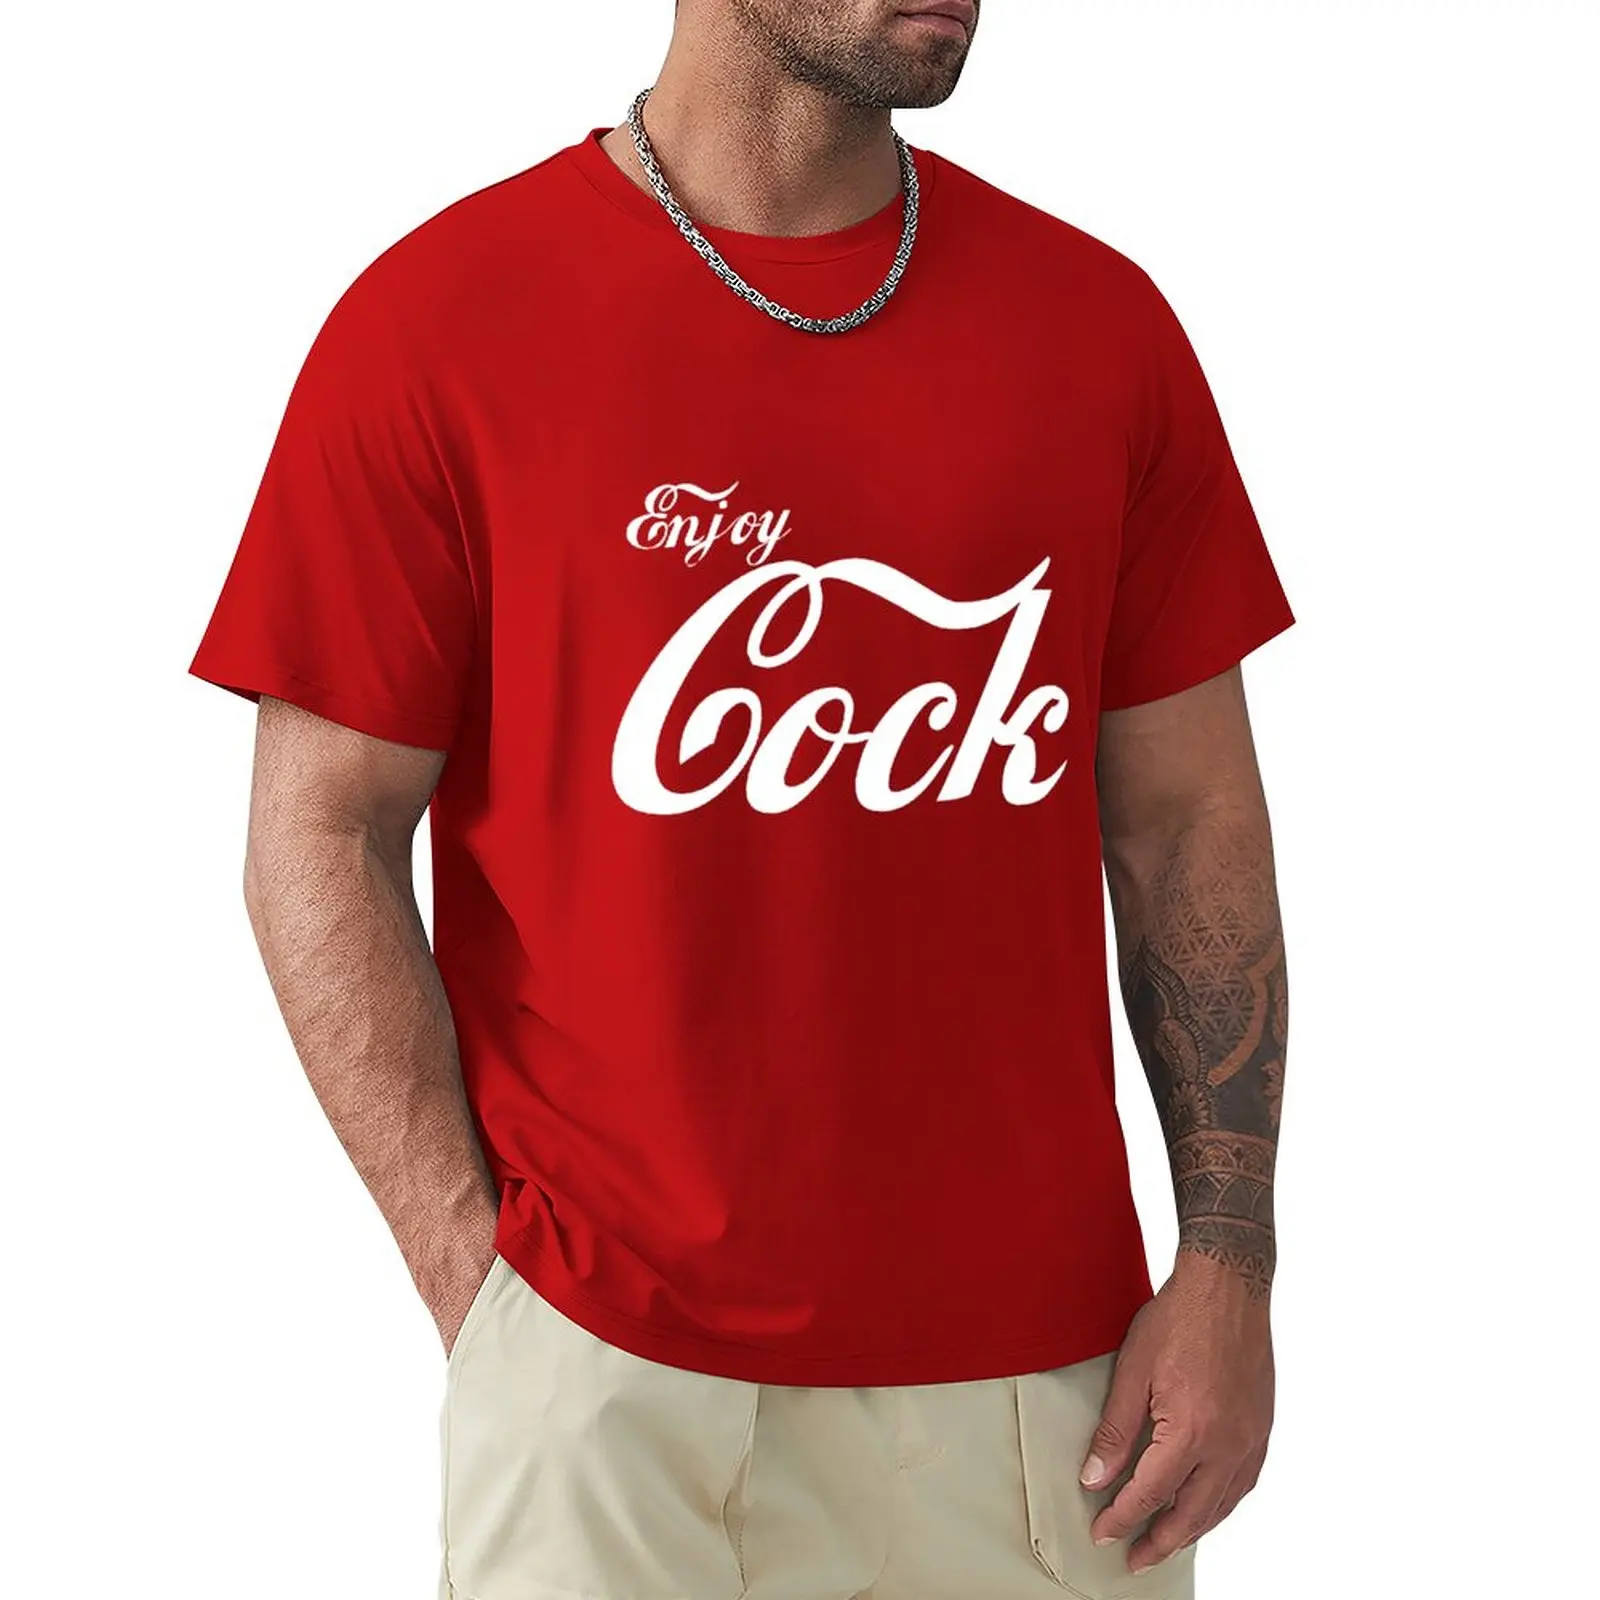 Футболка Enjoy Cock, мужские черные футболки, мужские короткие футболки